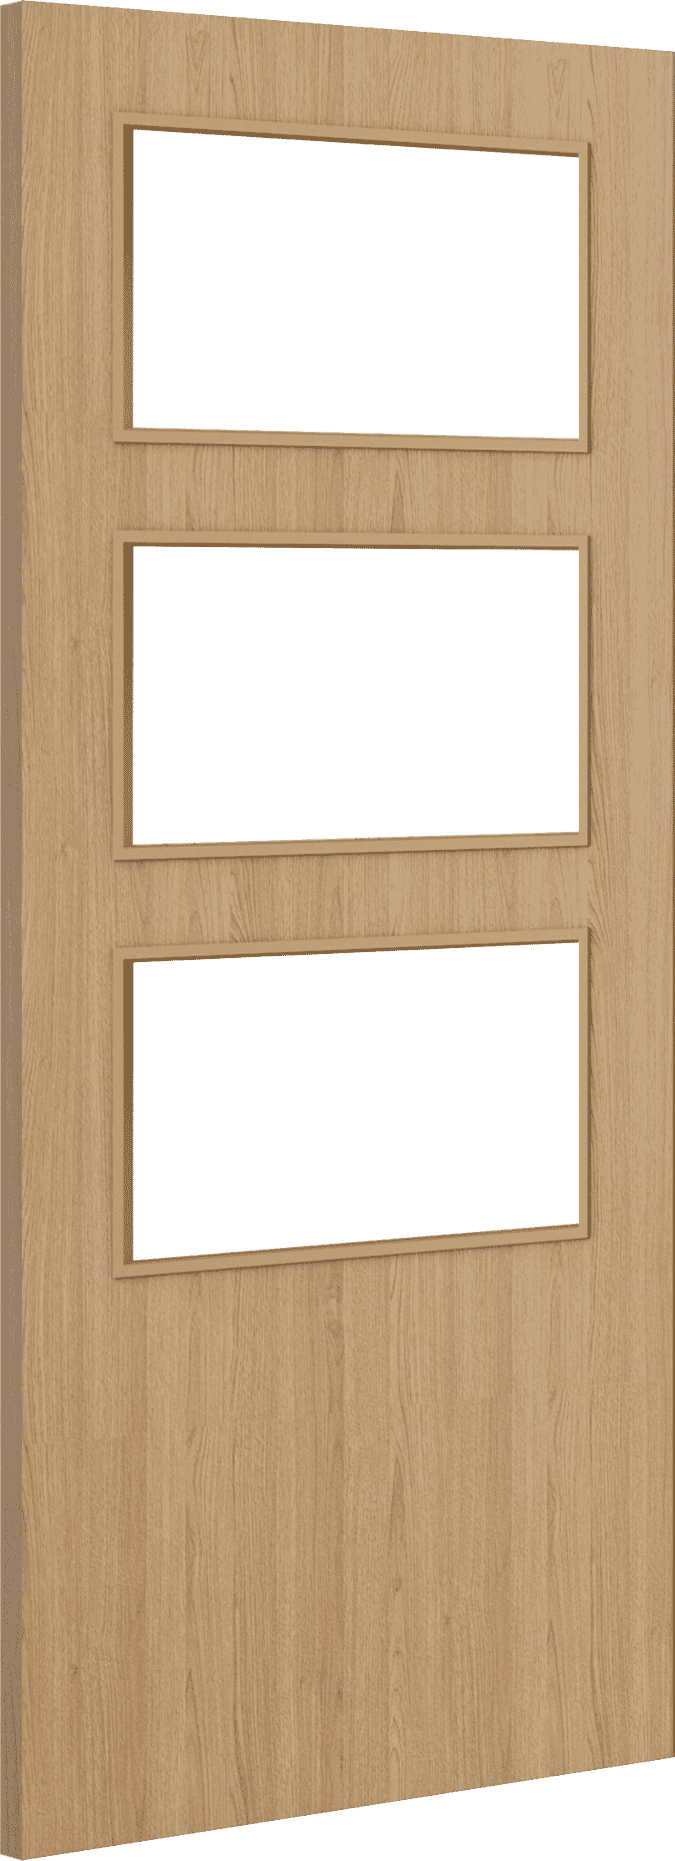 2040mm x 826mm x 44mm Architectural Oak 03 Frosted Glazed - Prefinished FD30 Fire Door Blank